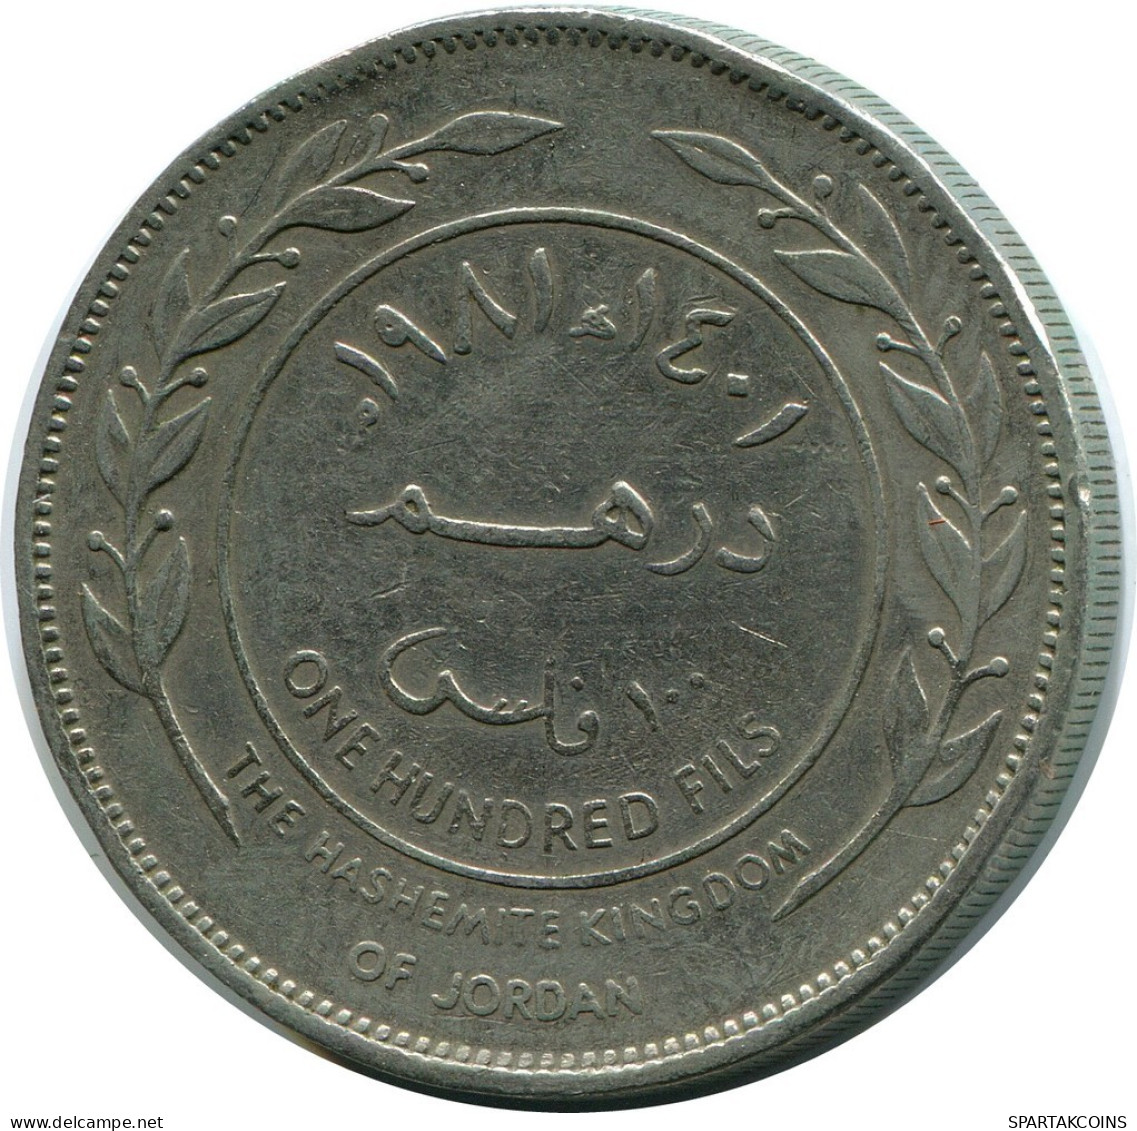 1 DIRHAM / 100 FILS 1981 JORDAN Coin #AP101.U.A - Jordania